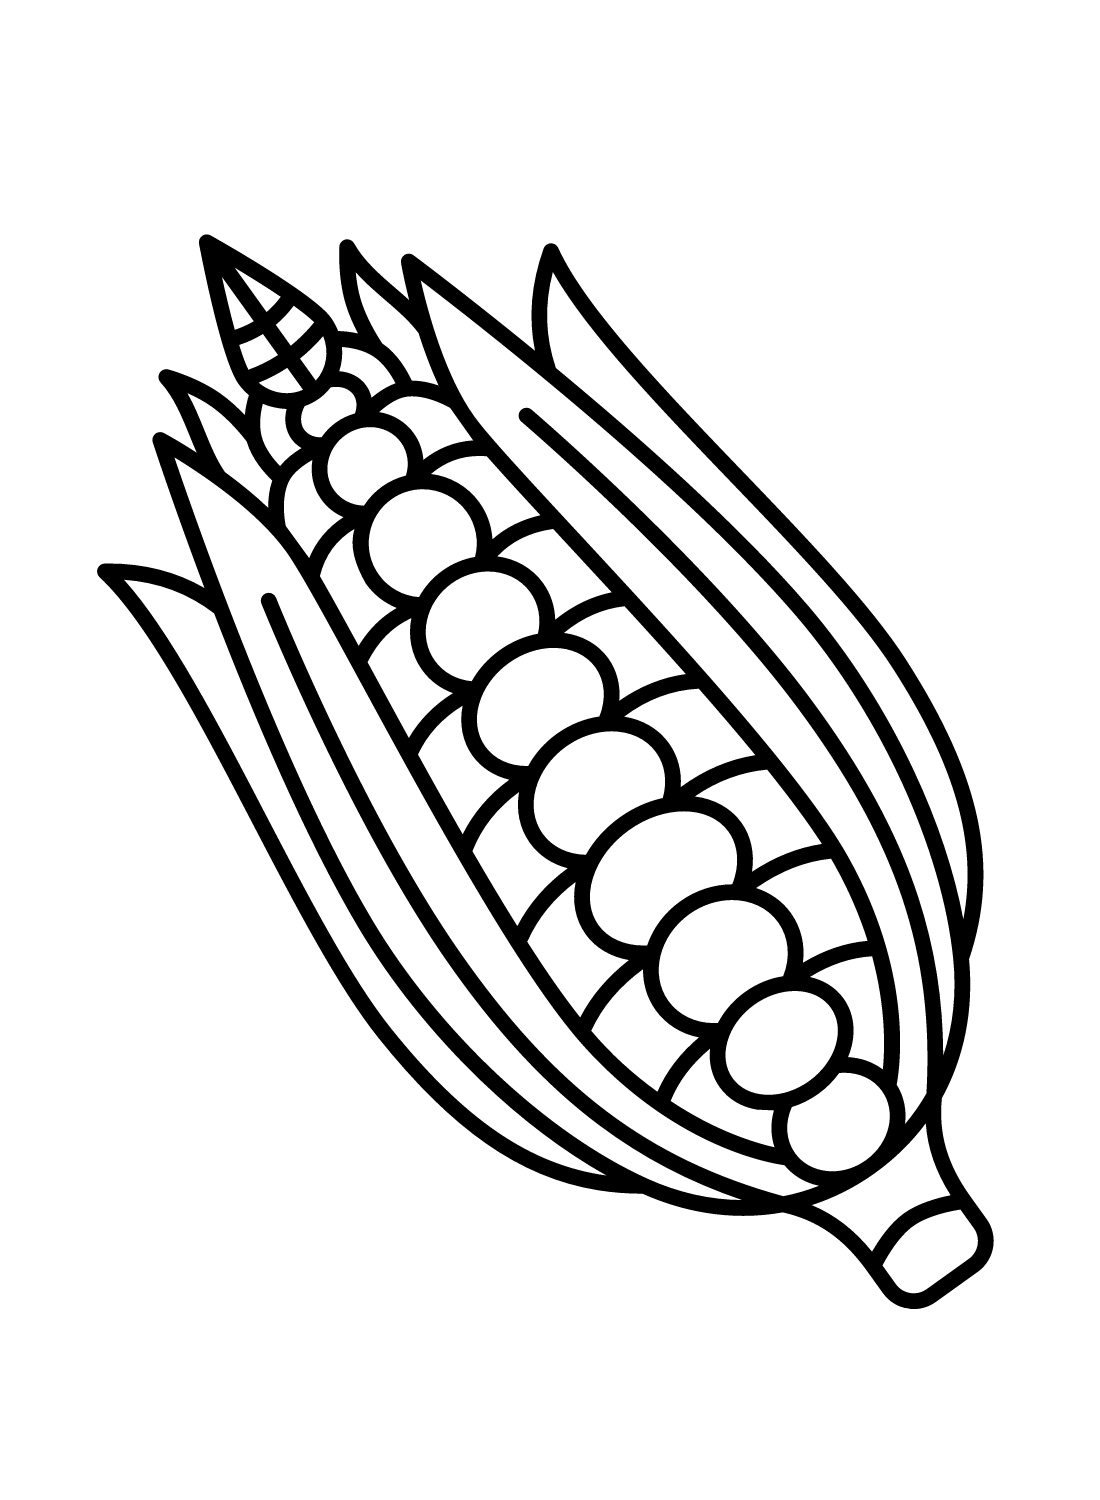 Corn Simple from Corn